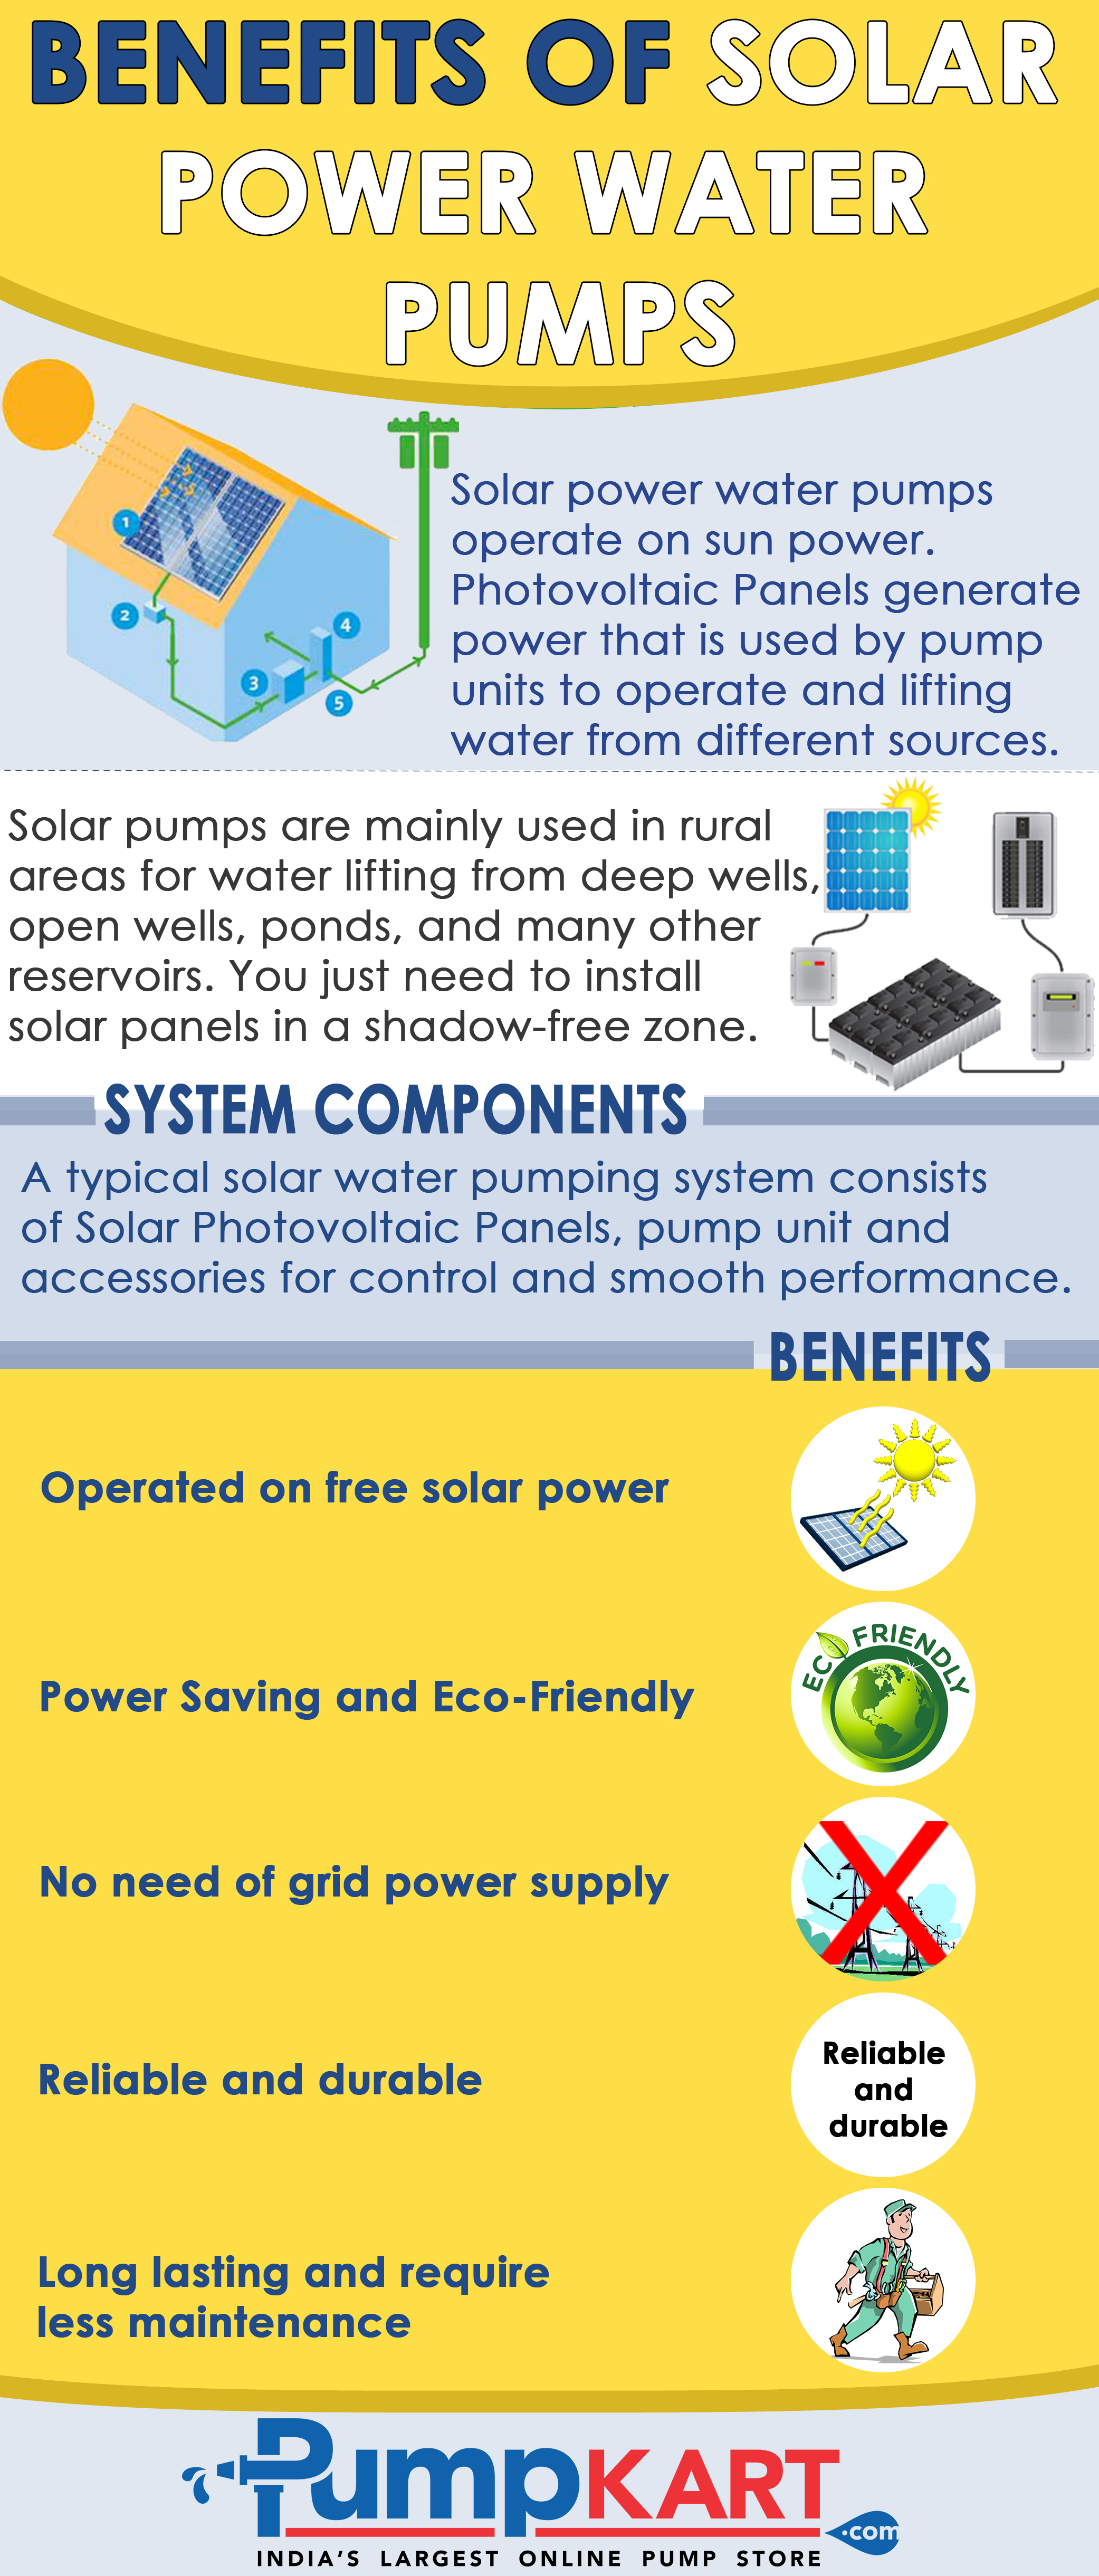 Benefits of Solar Power Water Pumps